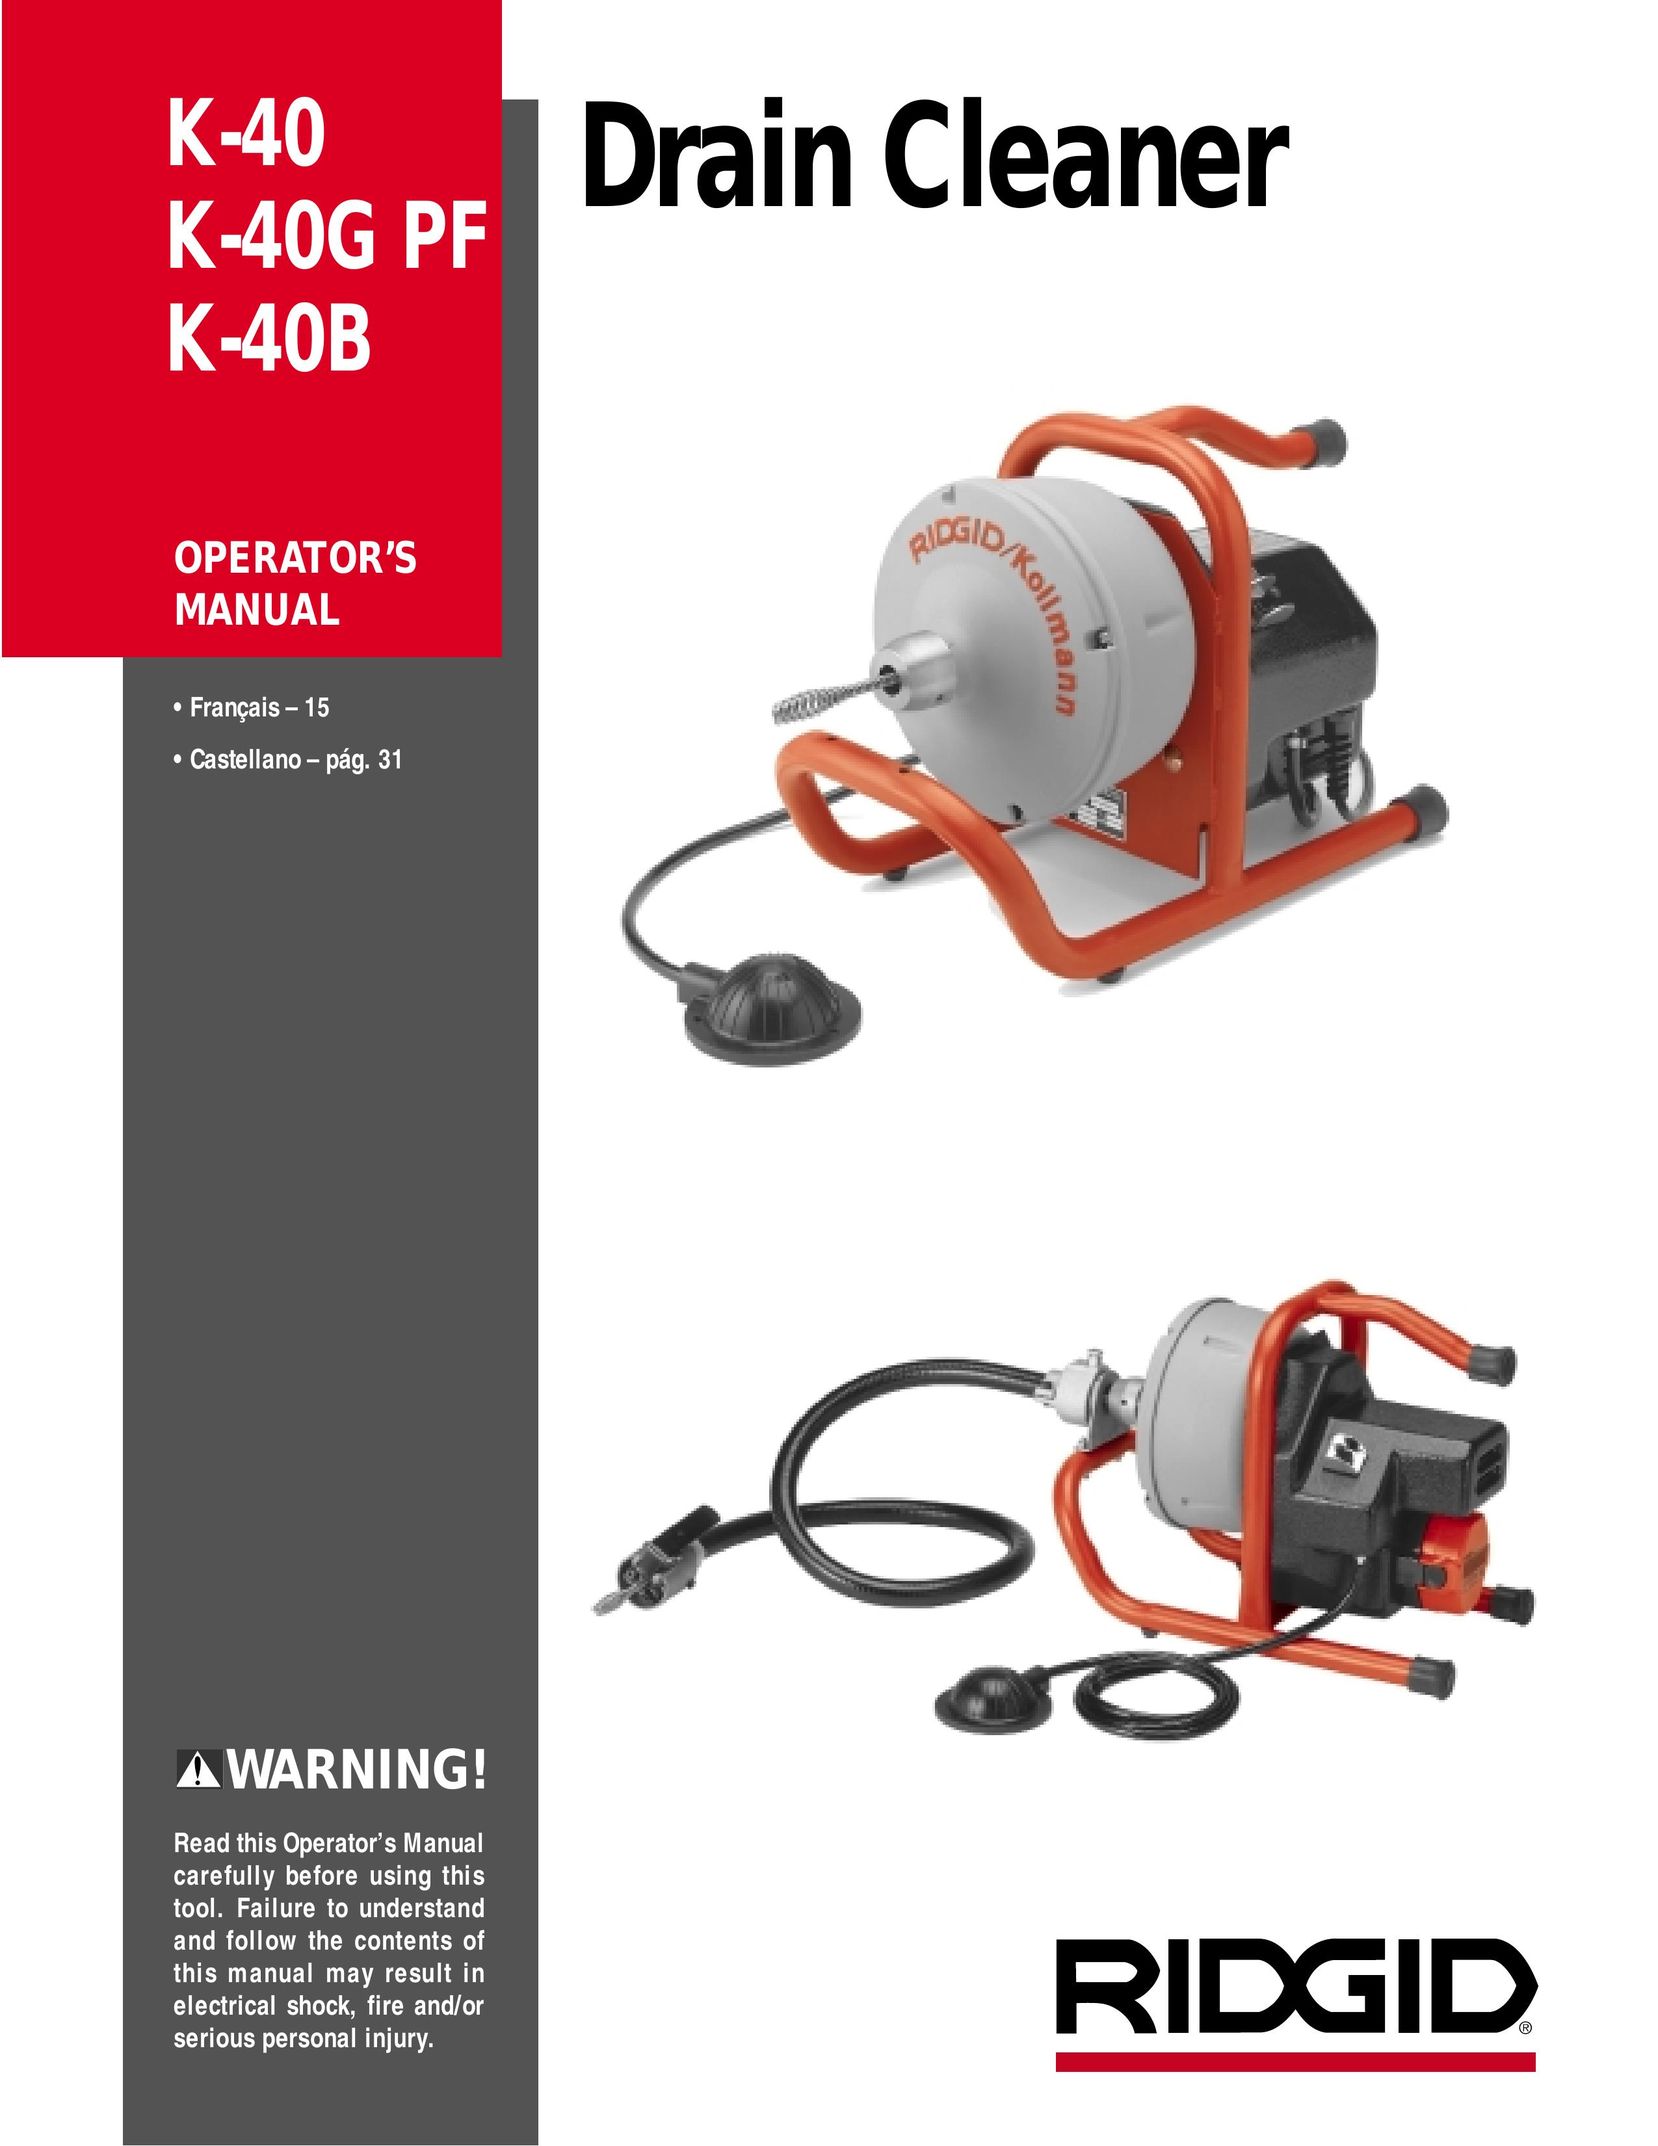 RIDGID K-40G PF Plumbing Product User Manual